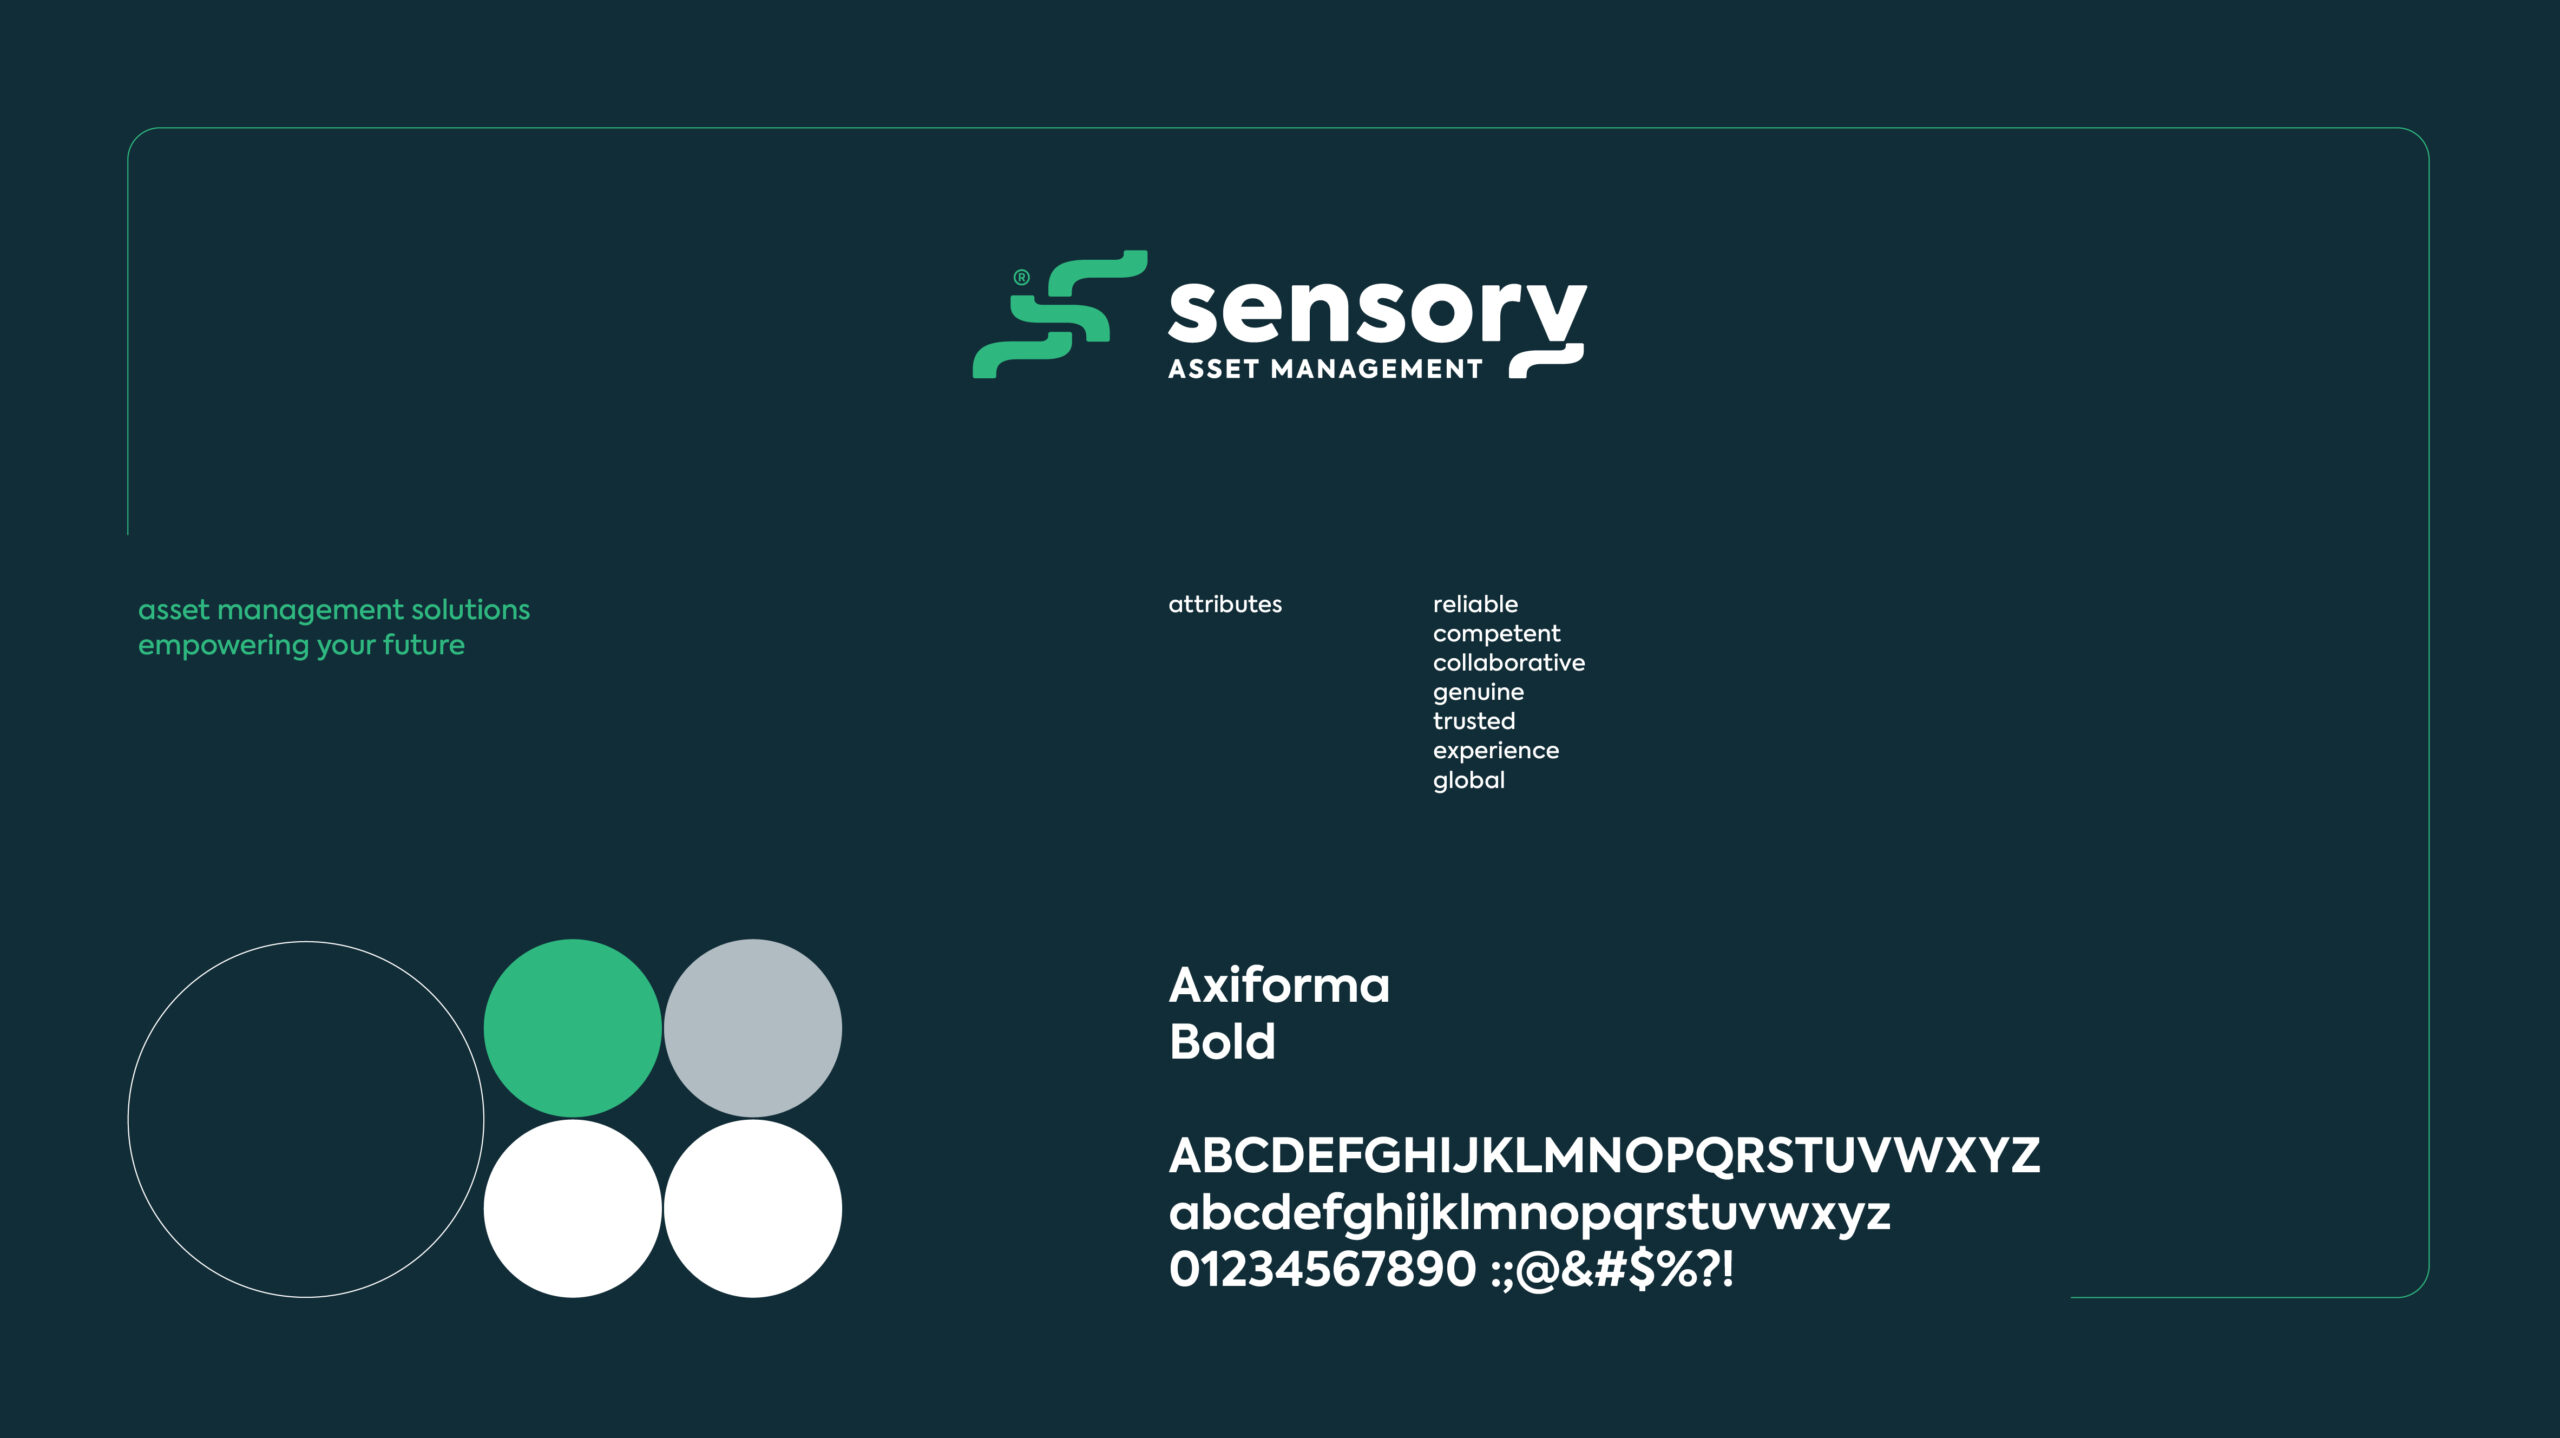 Sensory Asset Management Graphic Design, Merchandise and Branding Design and Development by TL Design Co.